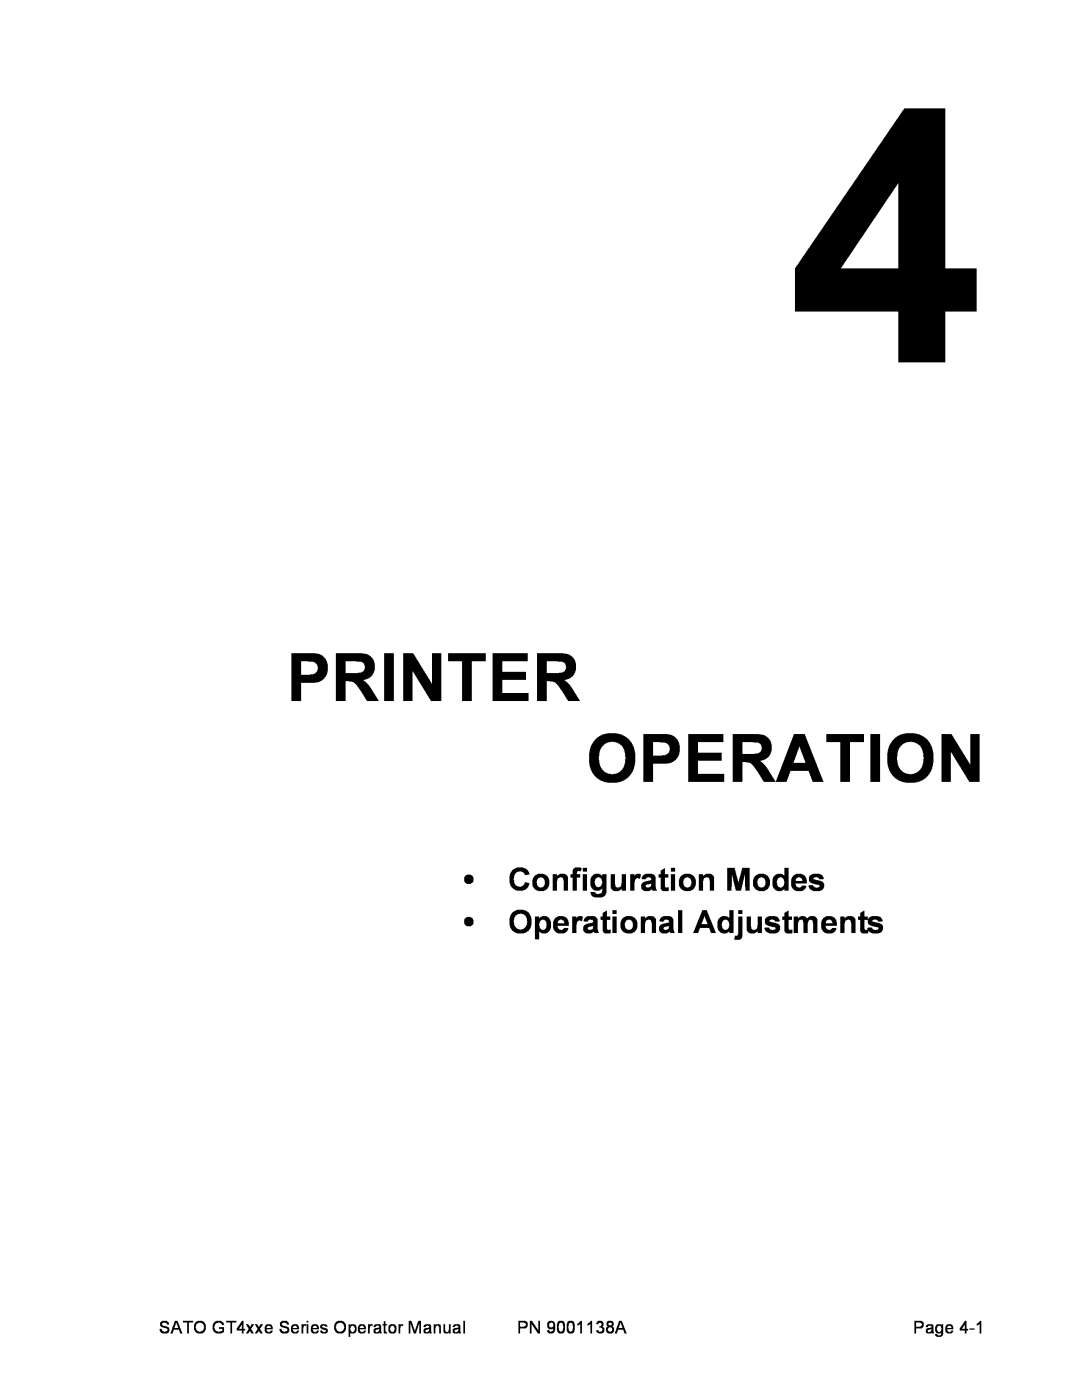 SATO GT 410, GT 424e, GT408 manual Printer Operation, Configuration Modes Operational Adjustments 